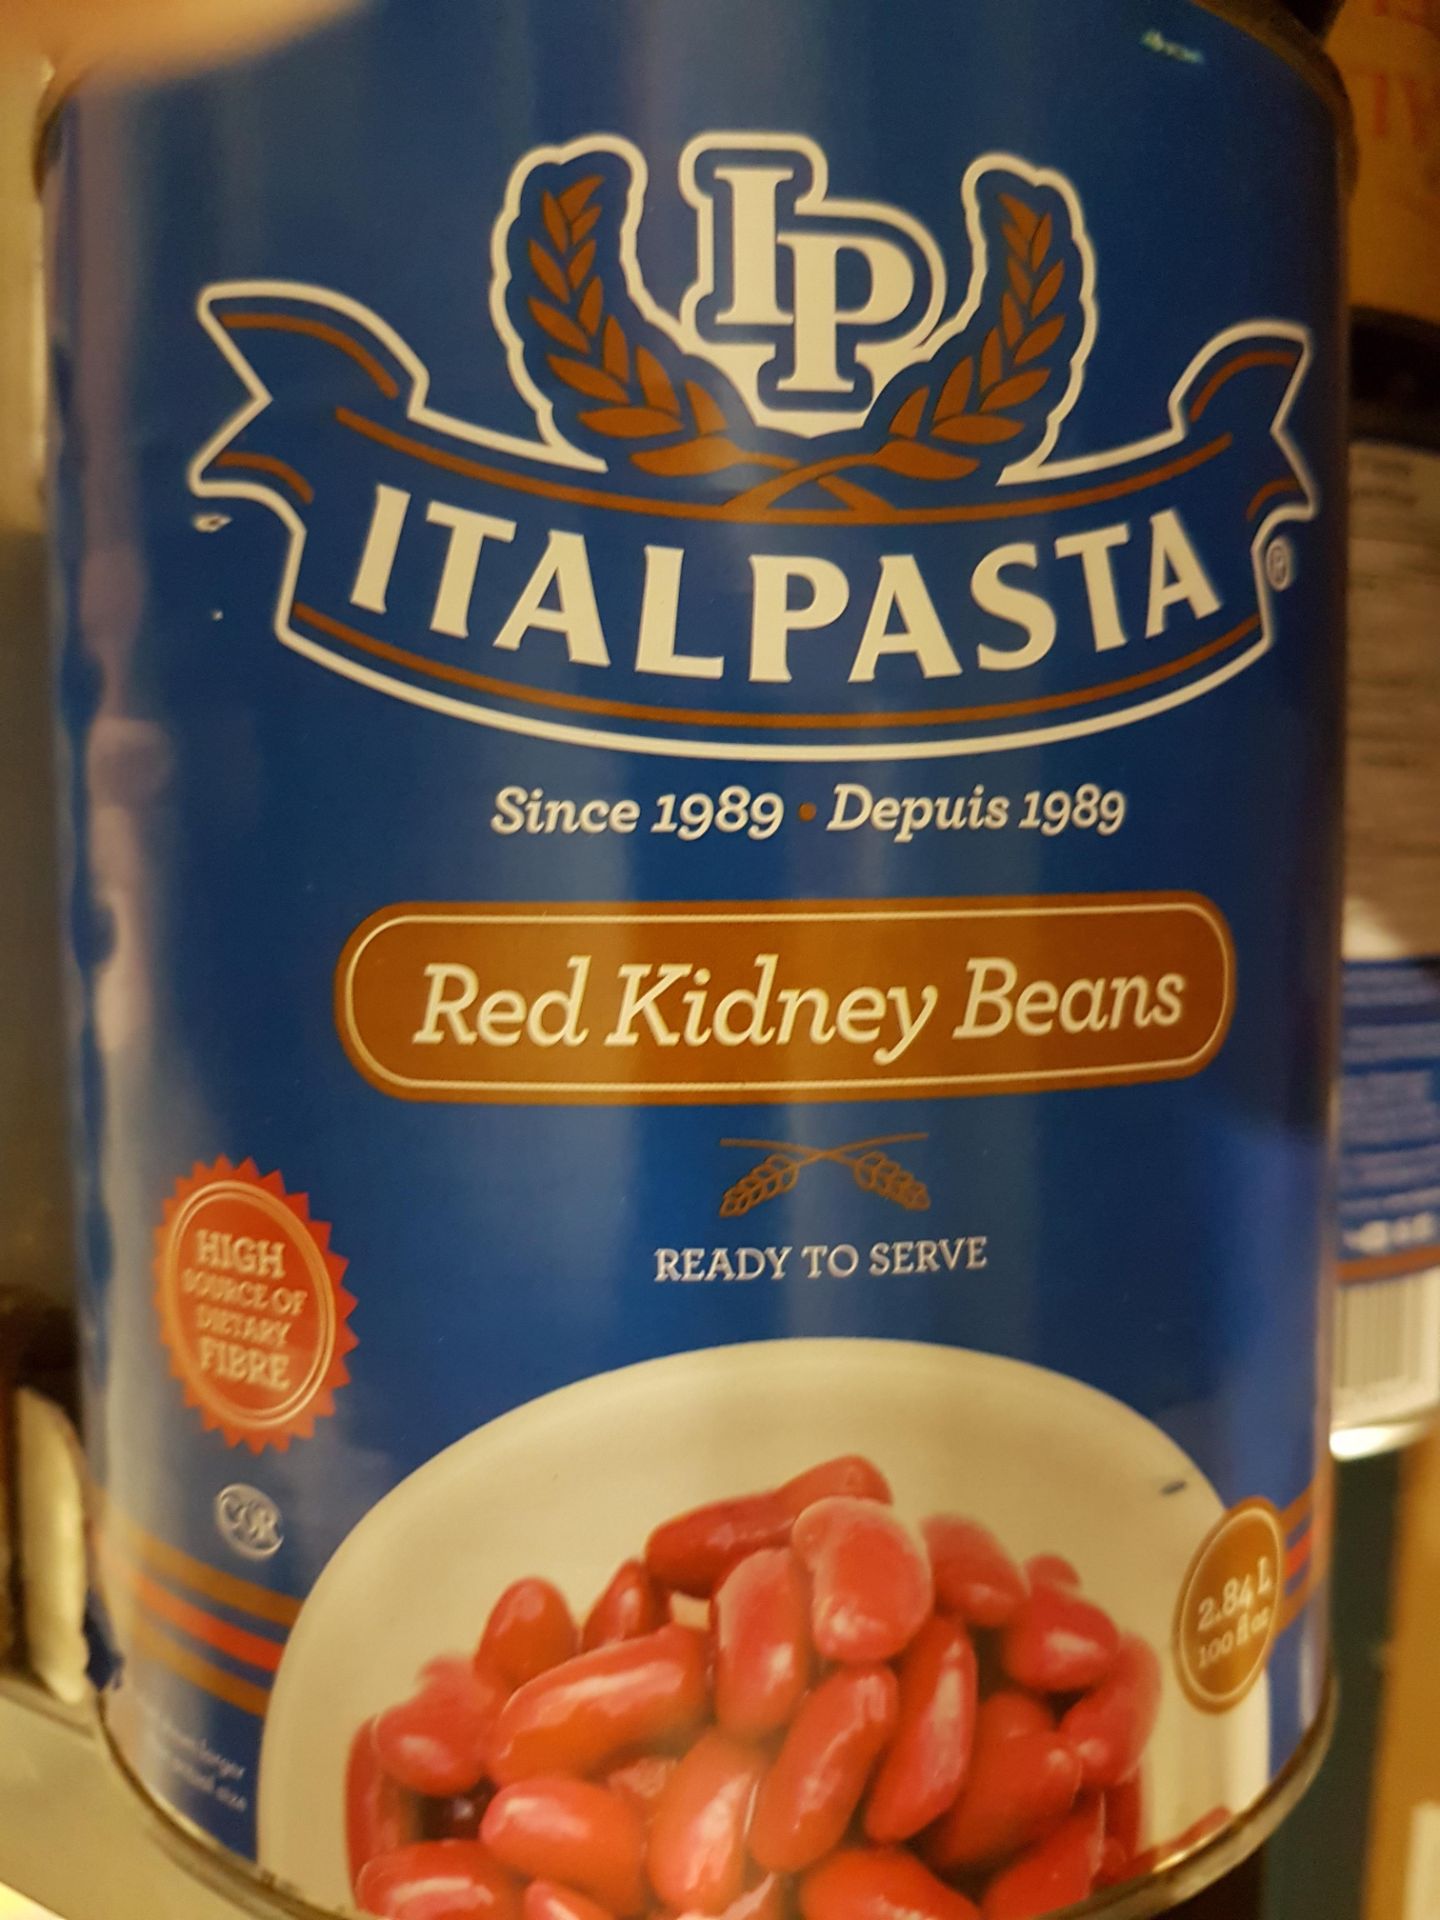 Italpasta Red Kidney Beans - 5 x 2.84LT Cans - Dented